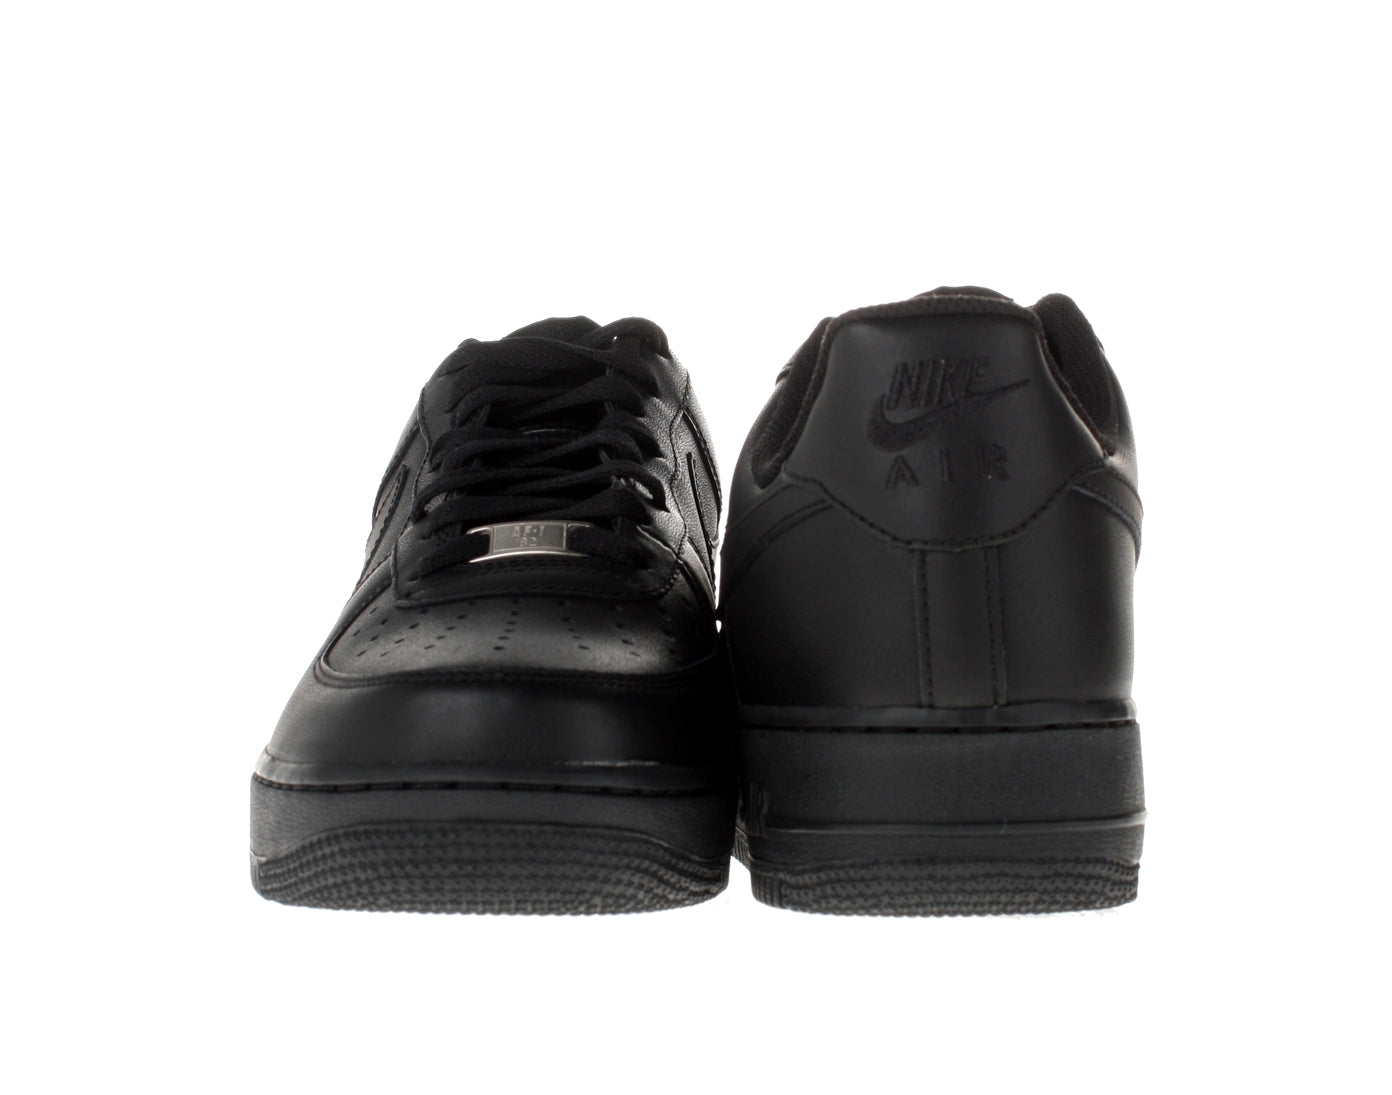 Nike Air Force 1 '07 Black/Black Men's Basketball Shoes 315122-001